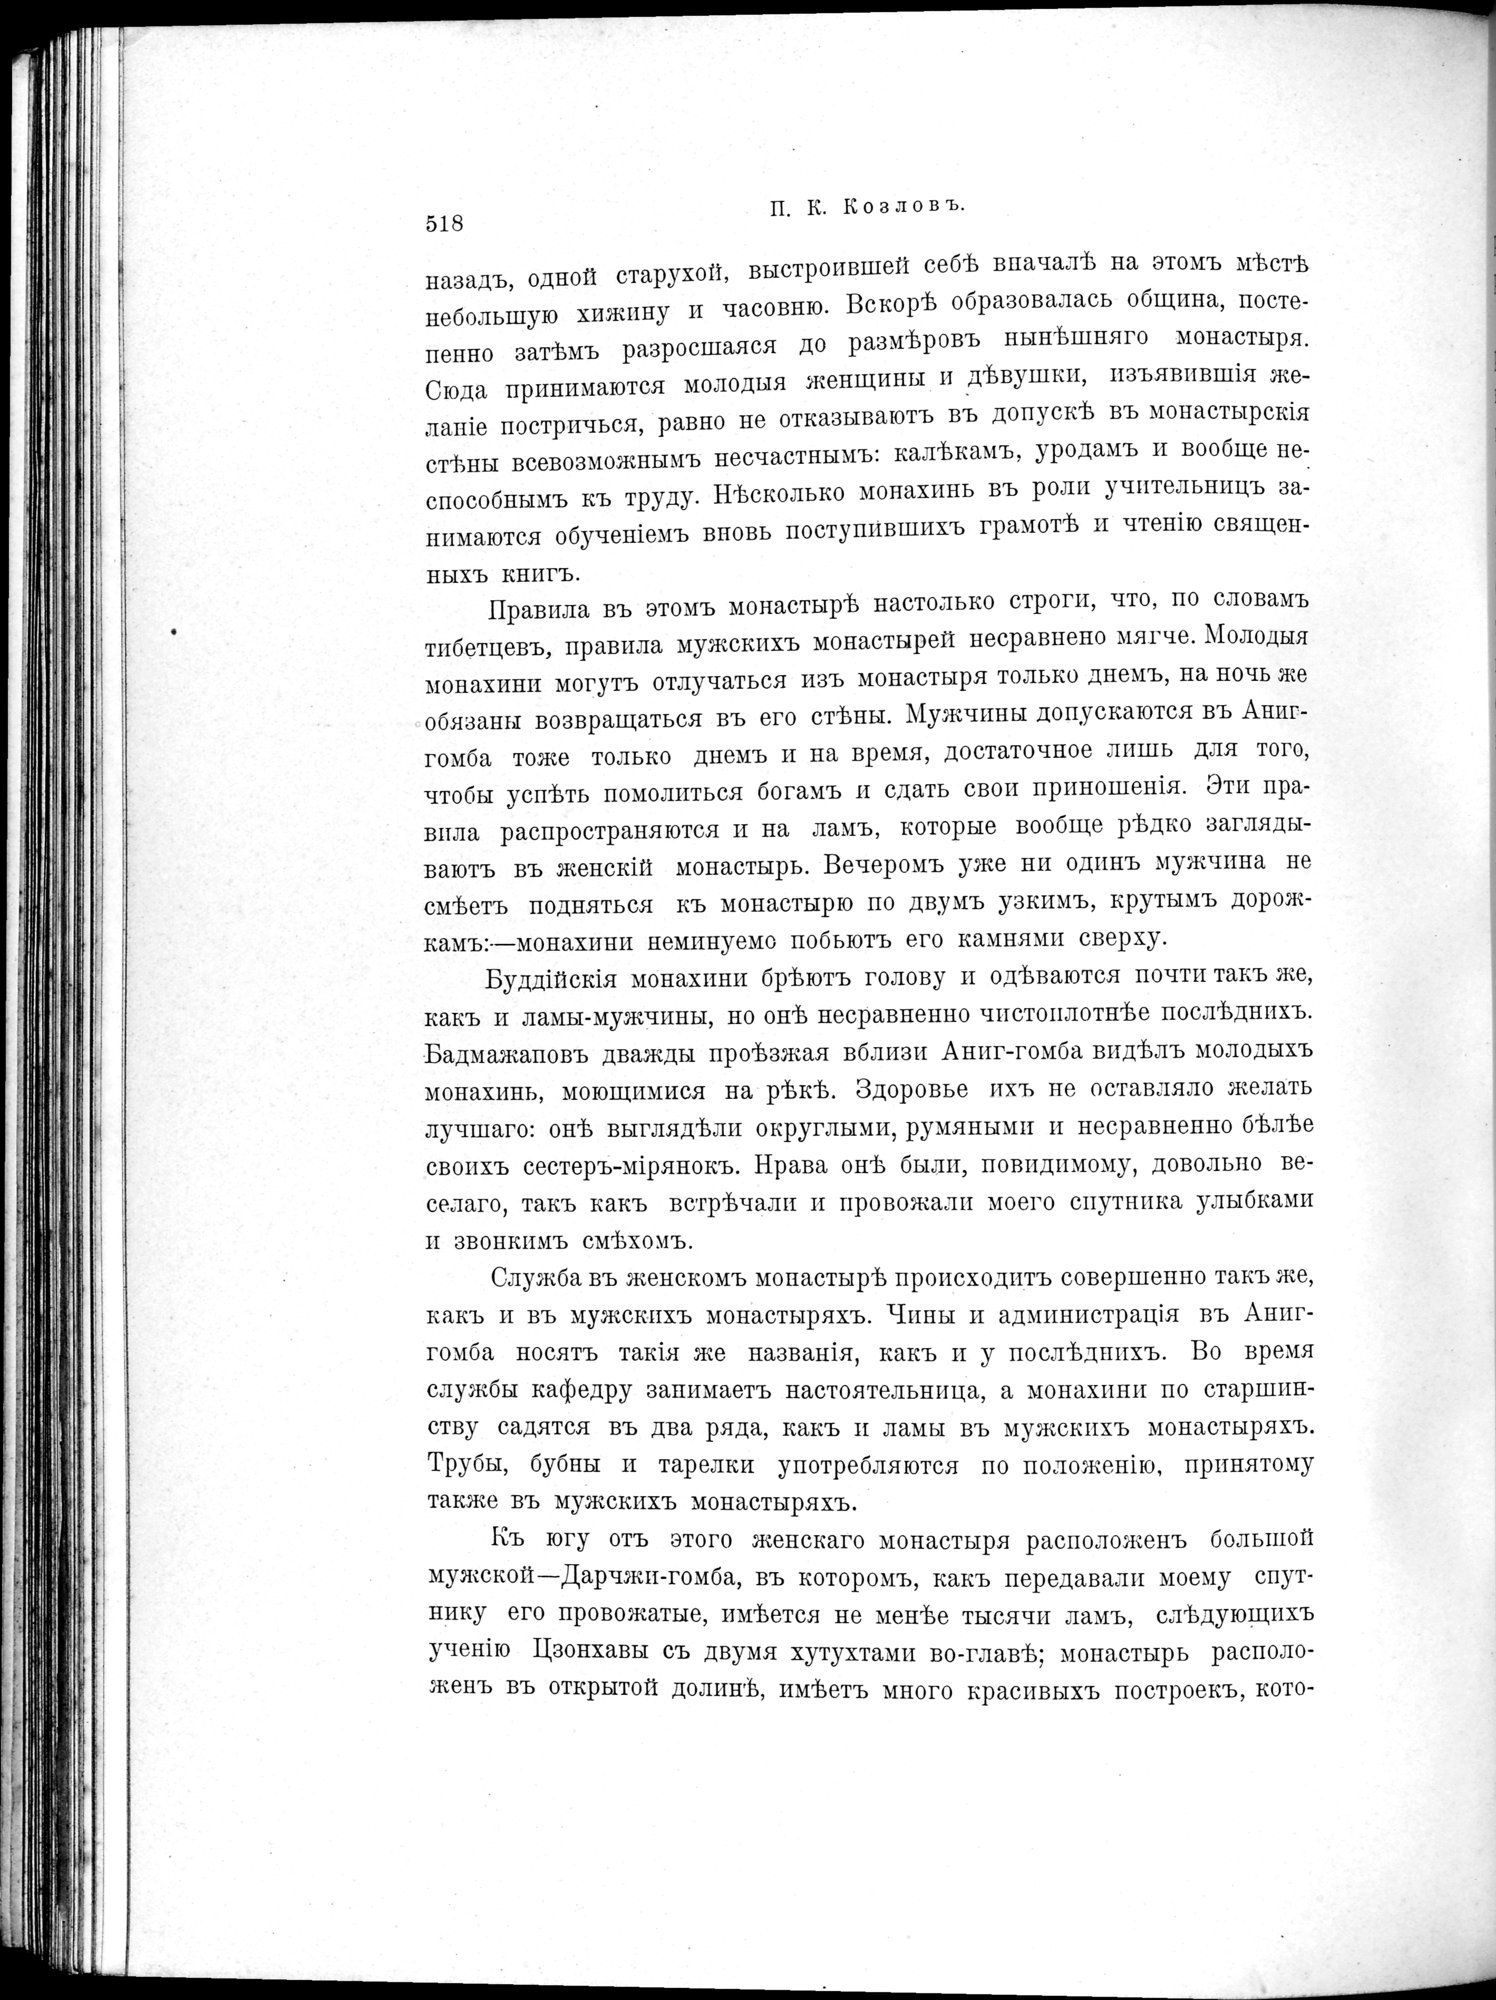 Mongoliia i Kam : vol.2 / Page 336 (Grayscale High Resolution Image)